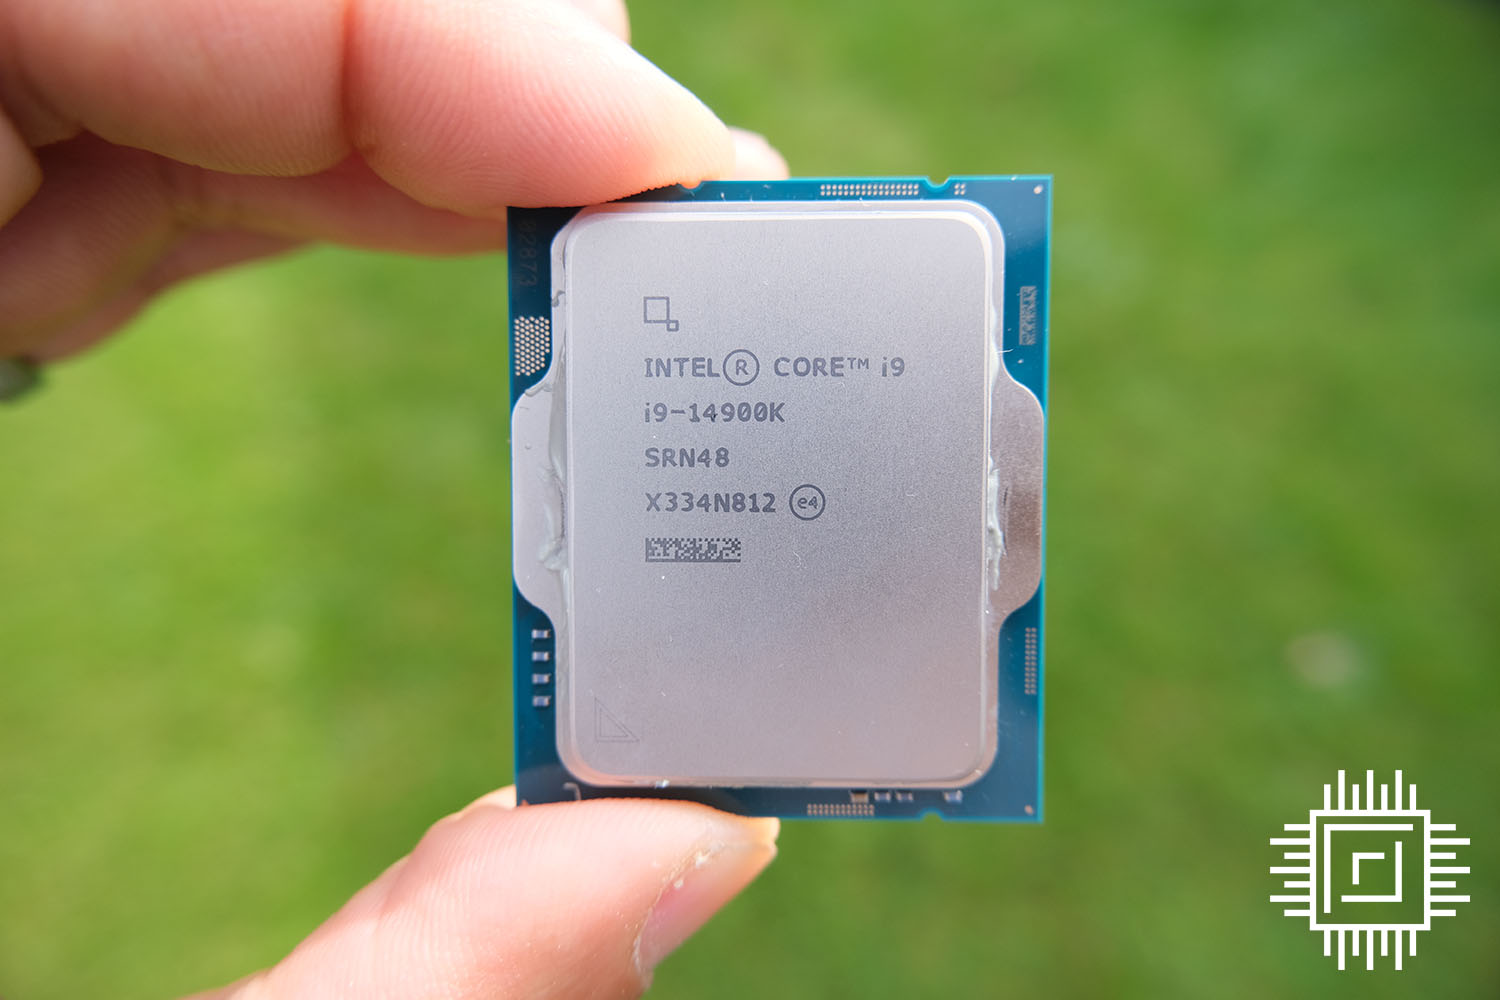 The Intel Core i9-14900K held in fingers.